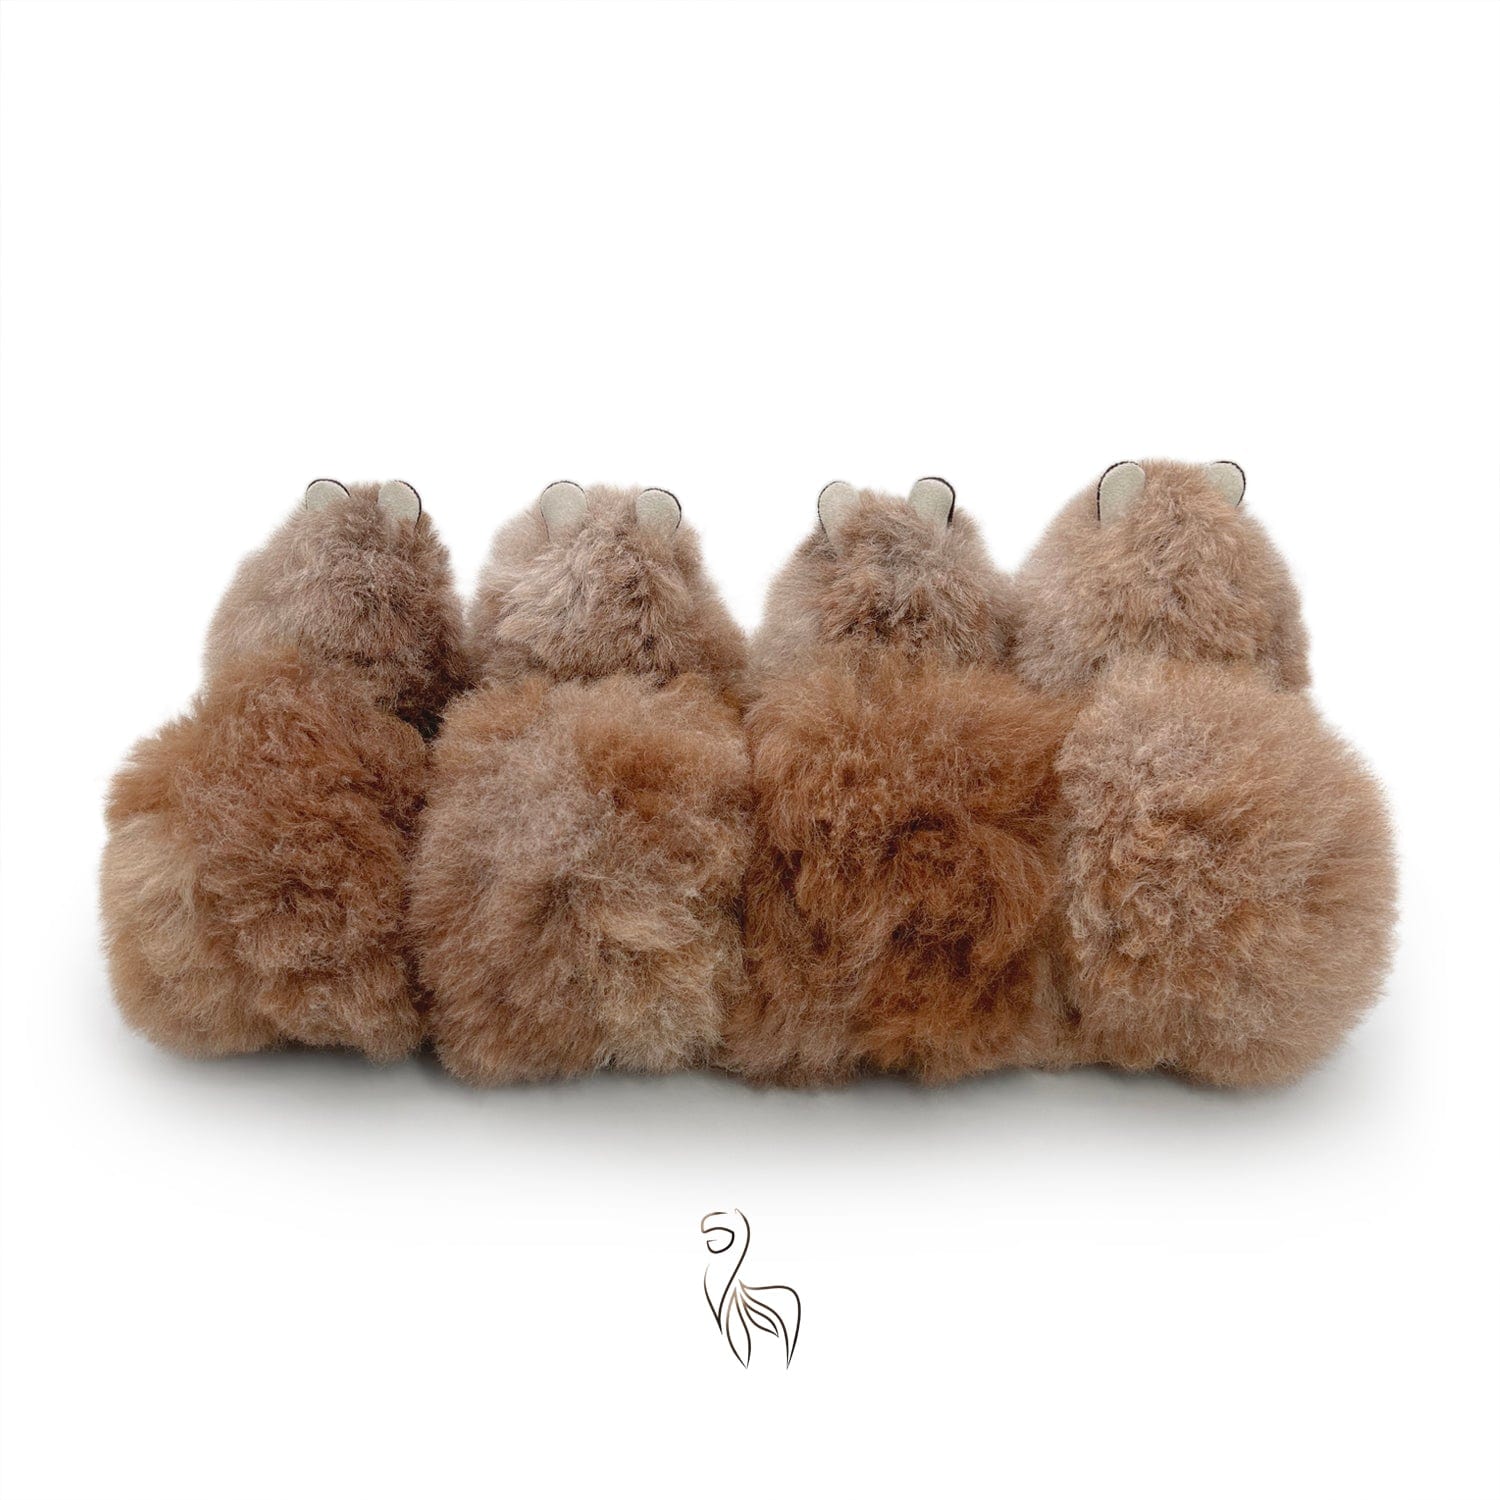 Wapiti - Small Alpaca Toy (23cm) - Limited Edition